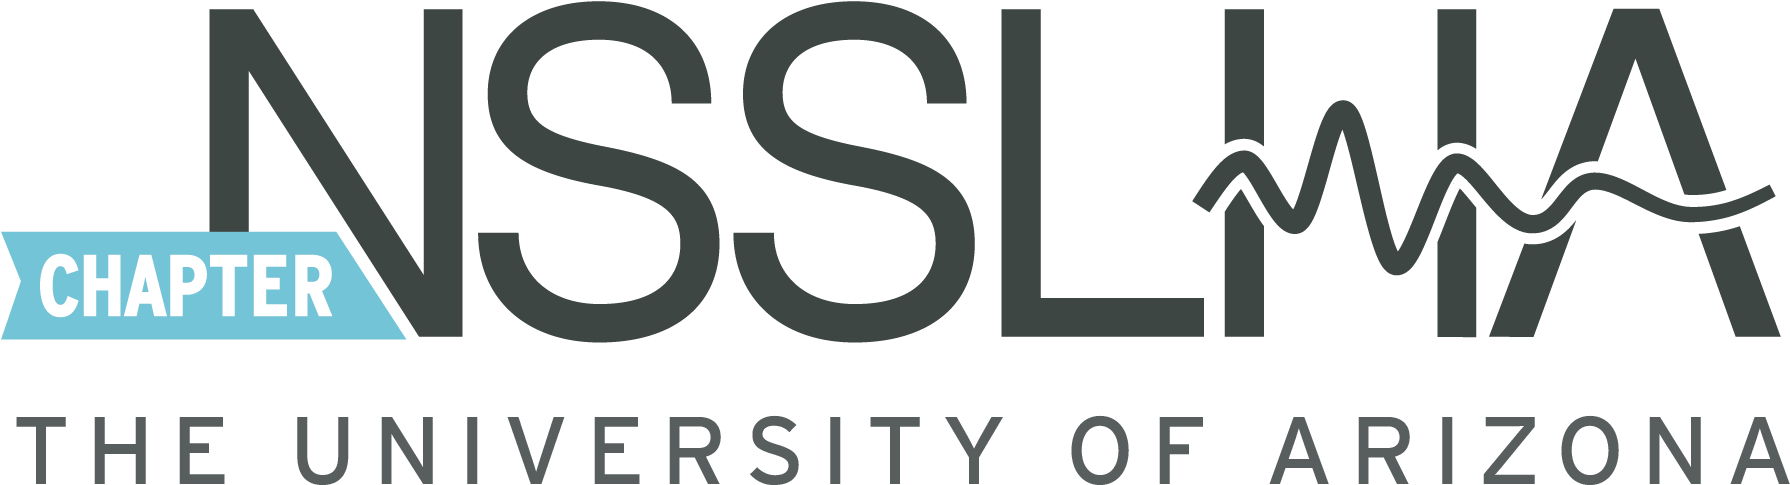 University Of Arizona Logo Png 1790 X 485